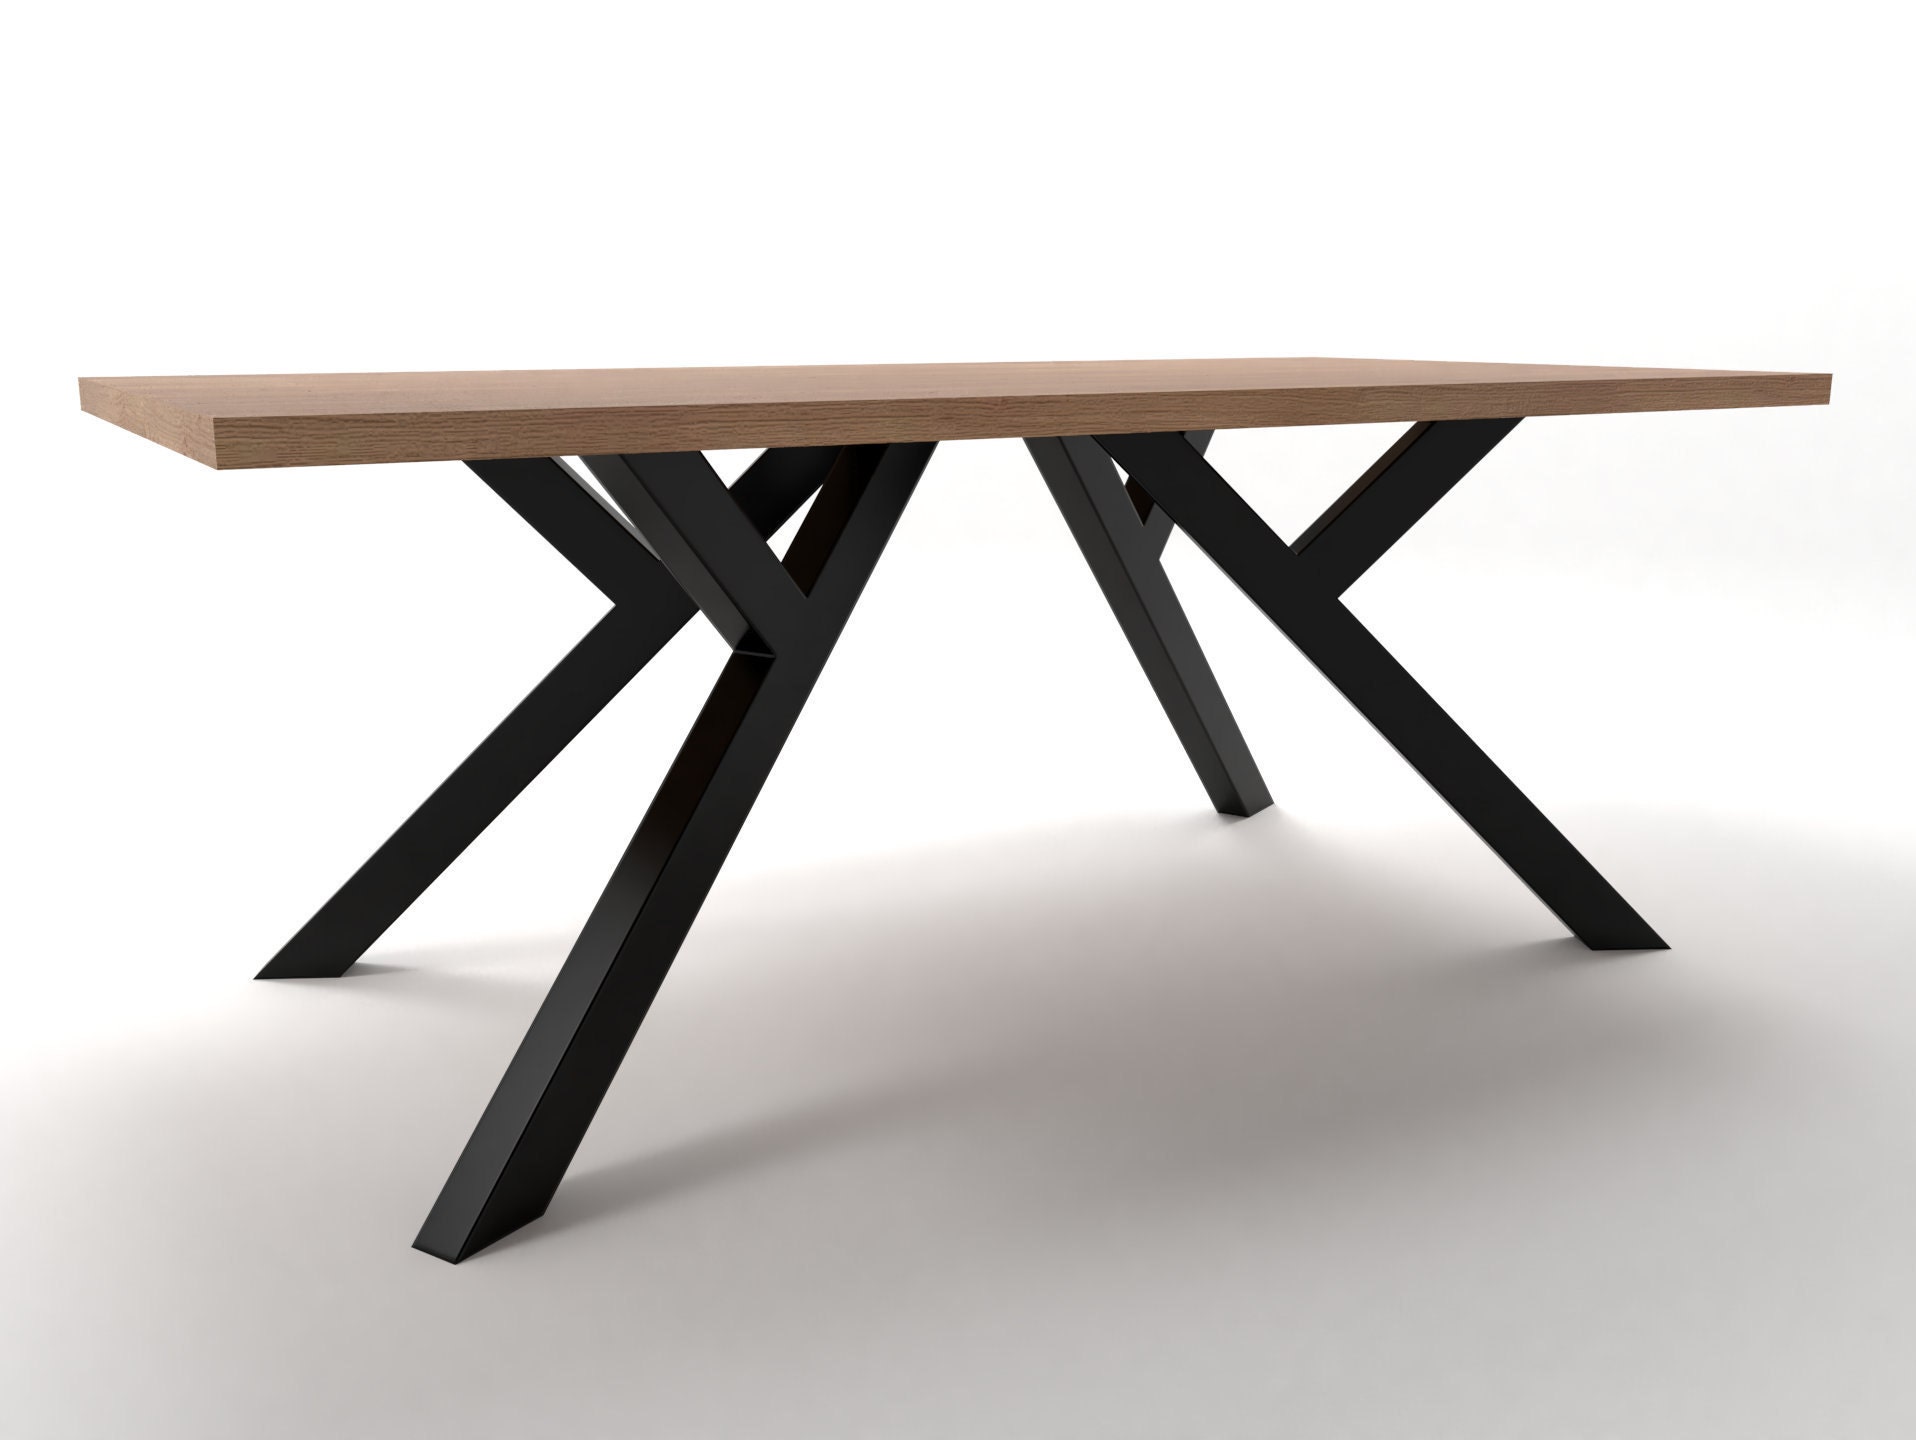 4x Y Table Legs, Industrial Table Legs, Legs Industrial Table, Industrial  Frame, Dining Table Legs, Industrial Design, Table Base -  Canada